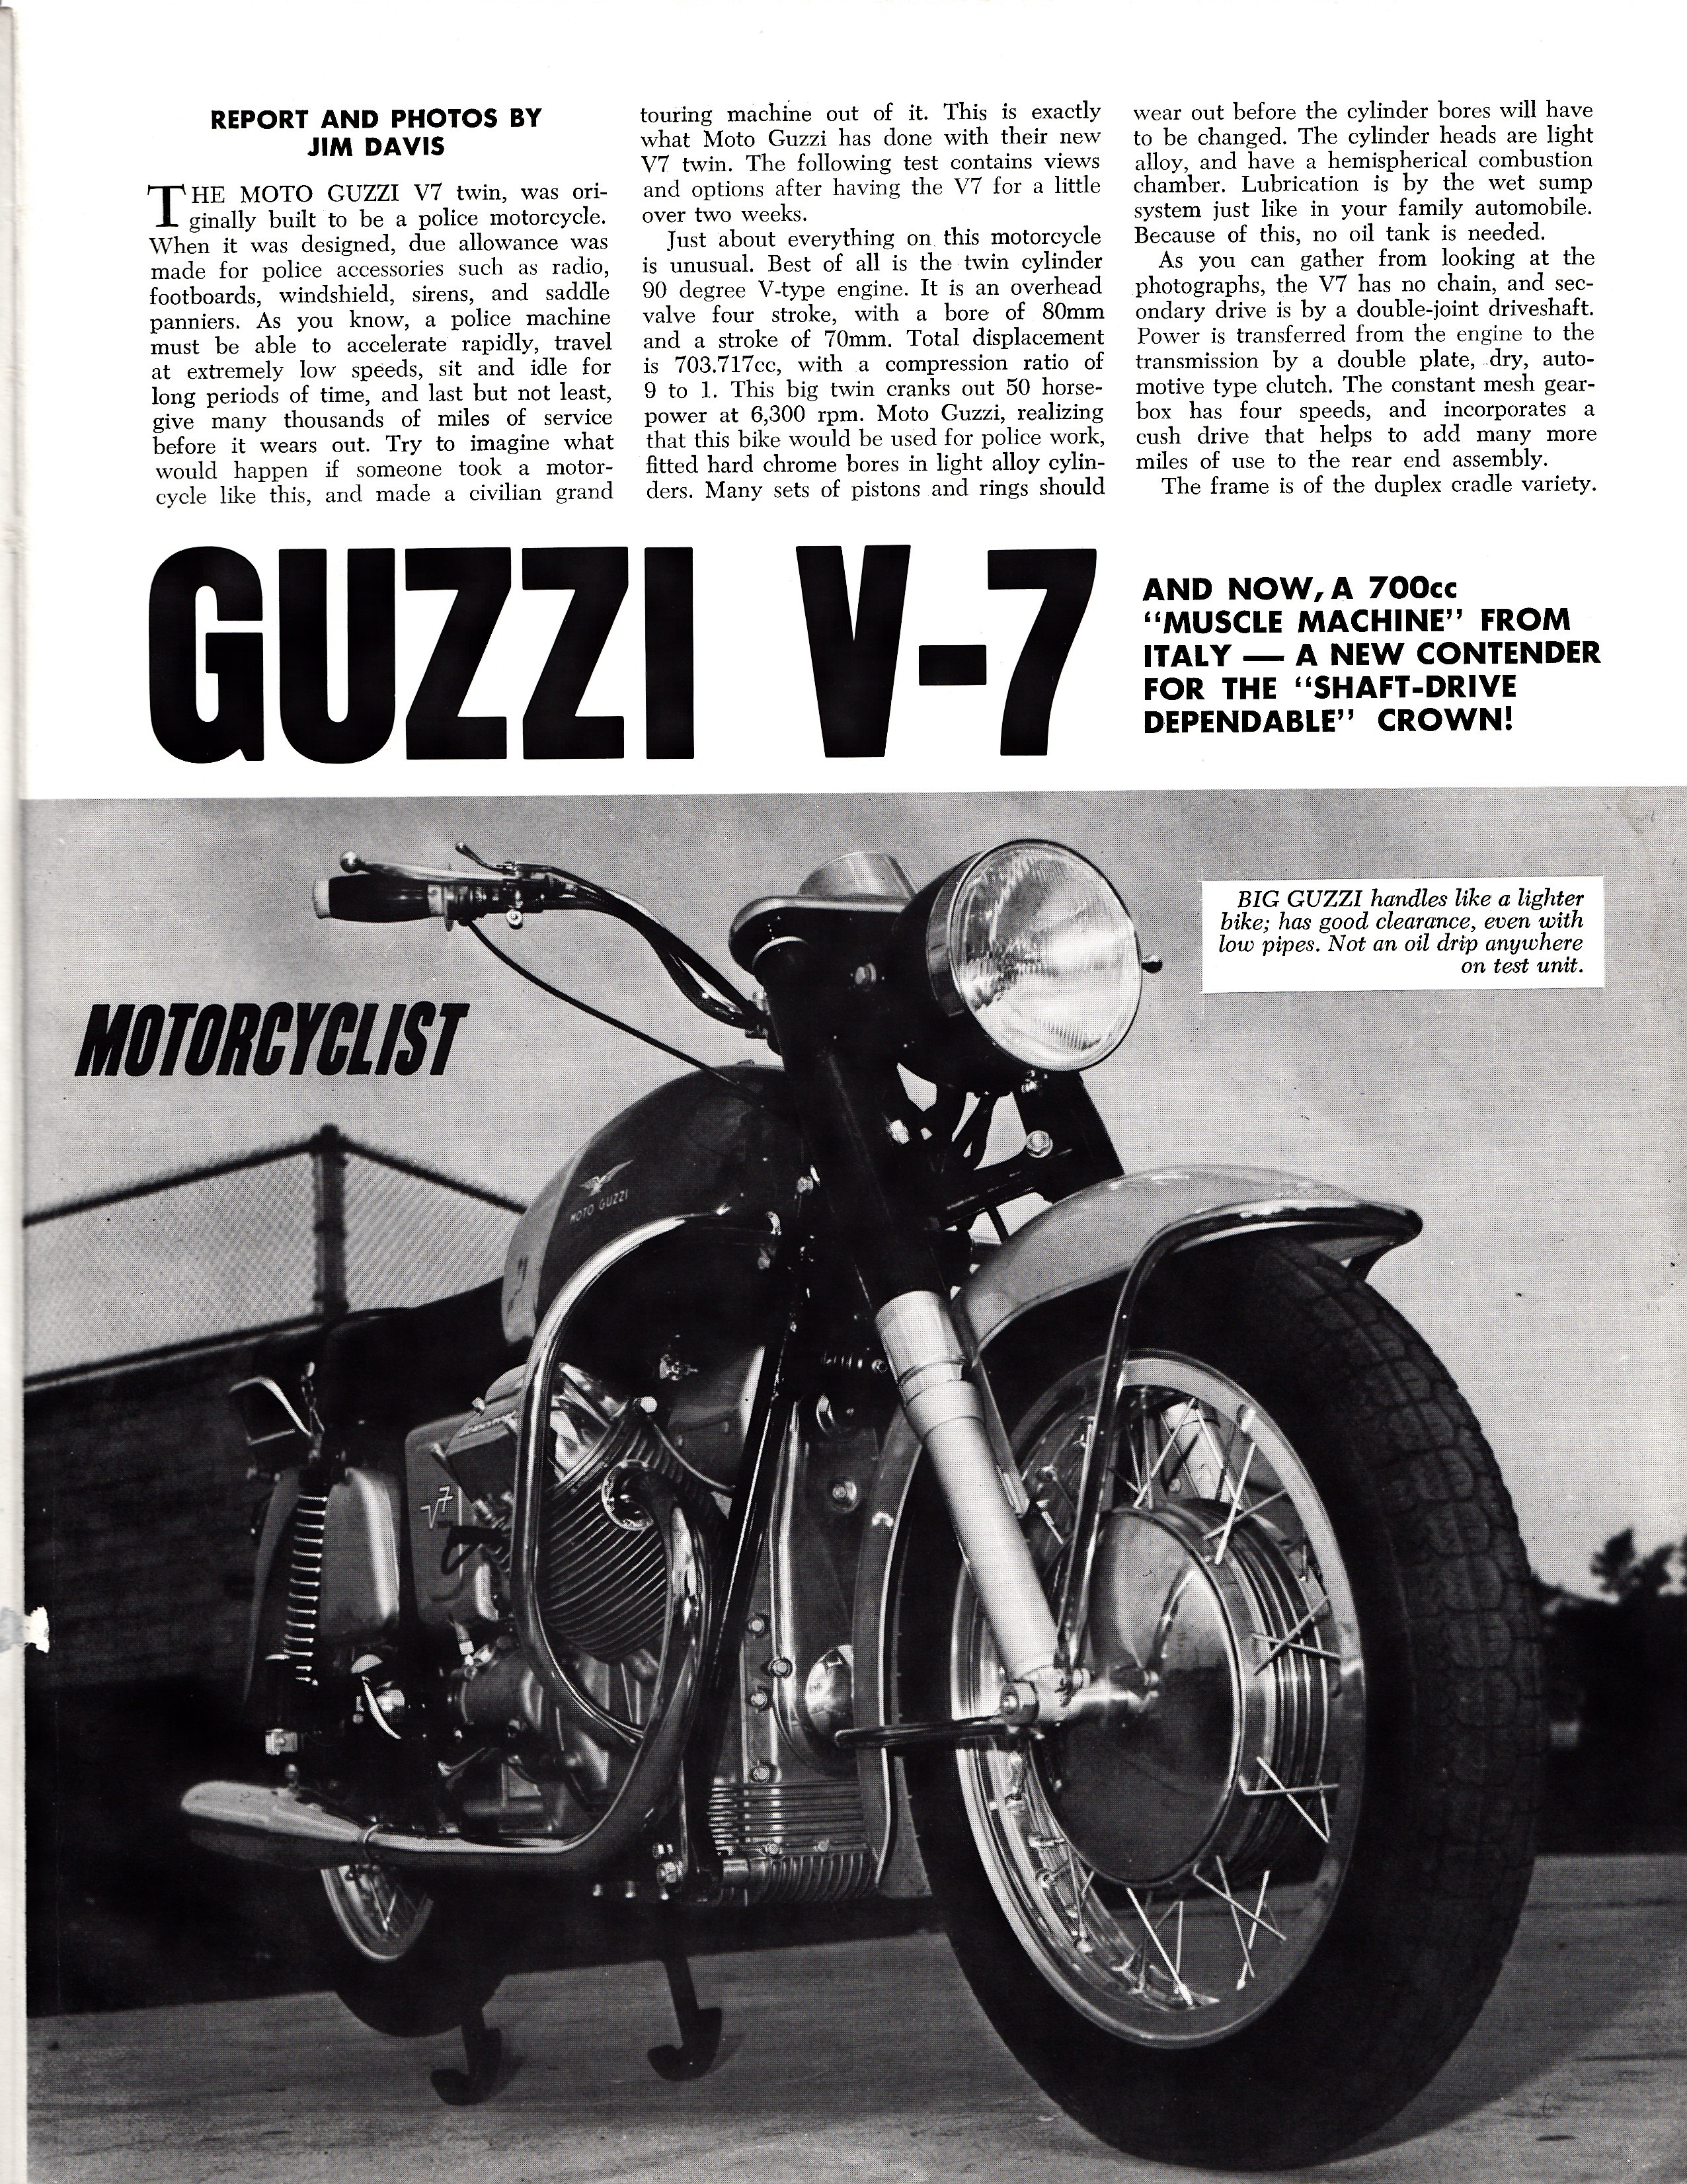 Moto Guzzi V700 factory brochure of magazine reviews, Page 5 of 8.